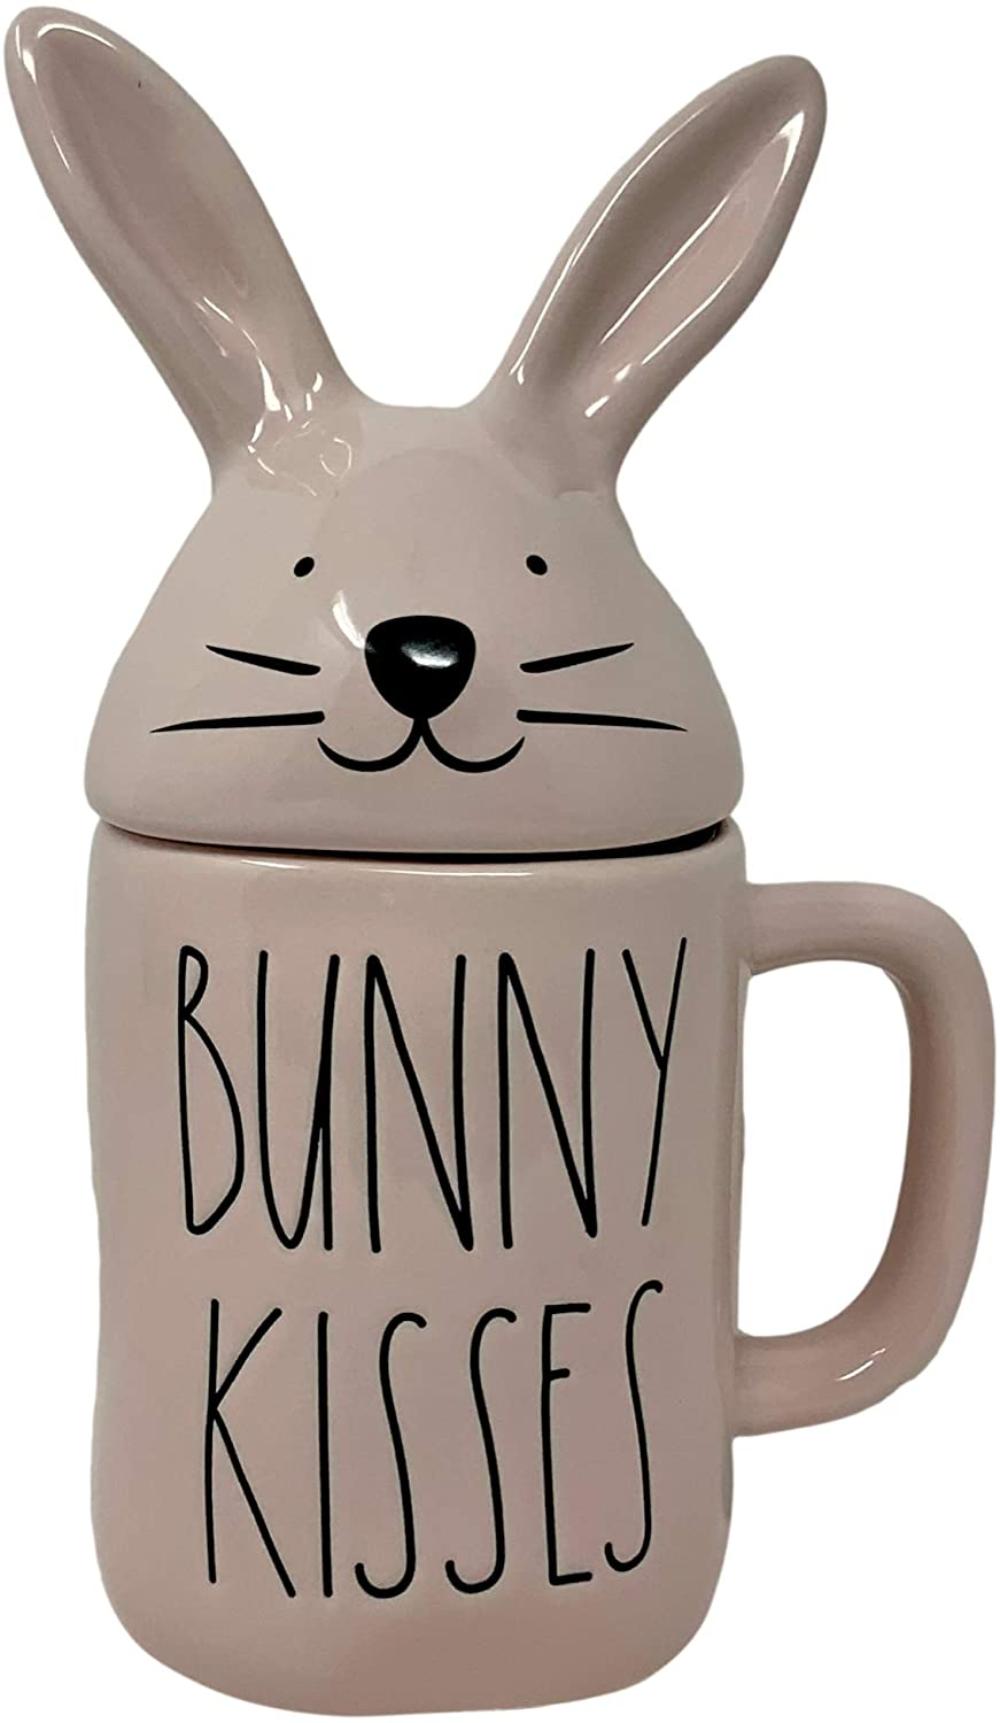 Rae Dunn BUNNY KISSES Wood Bunny Frame Sign Easter Spring Shelf/Wall Decor 